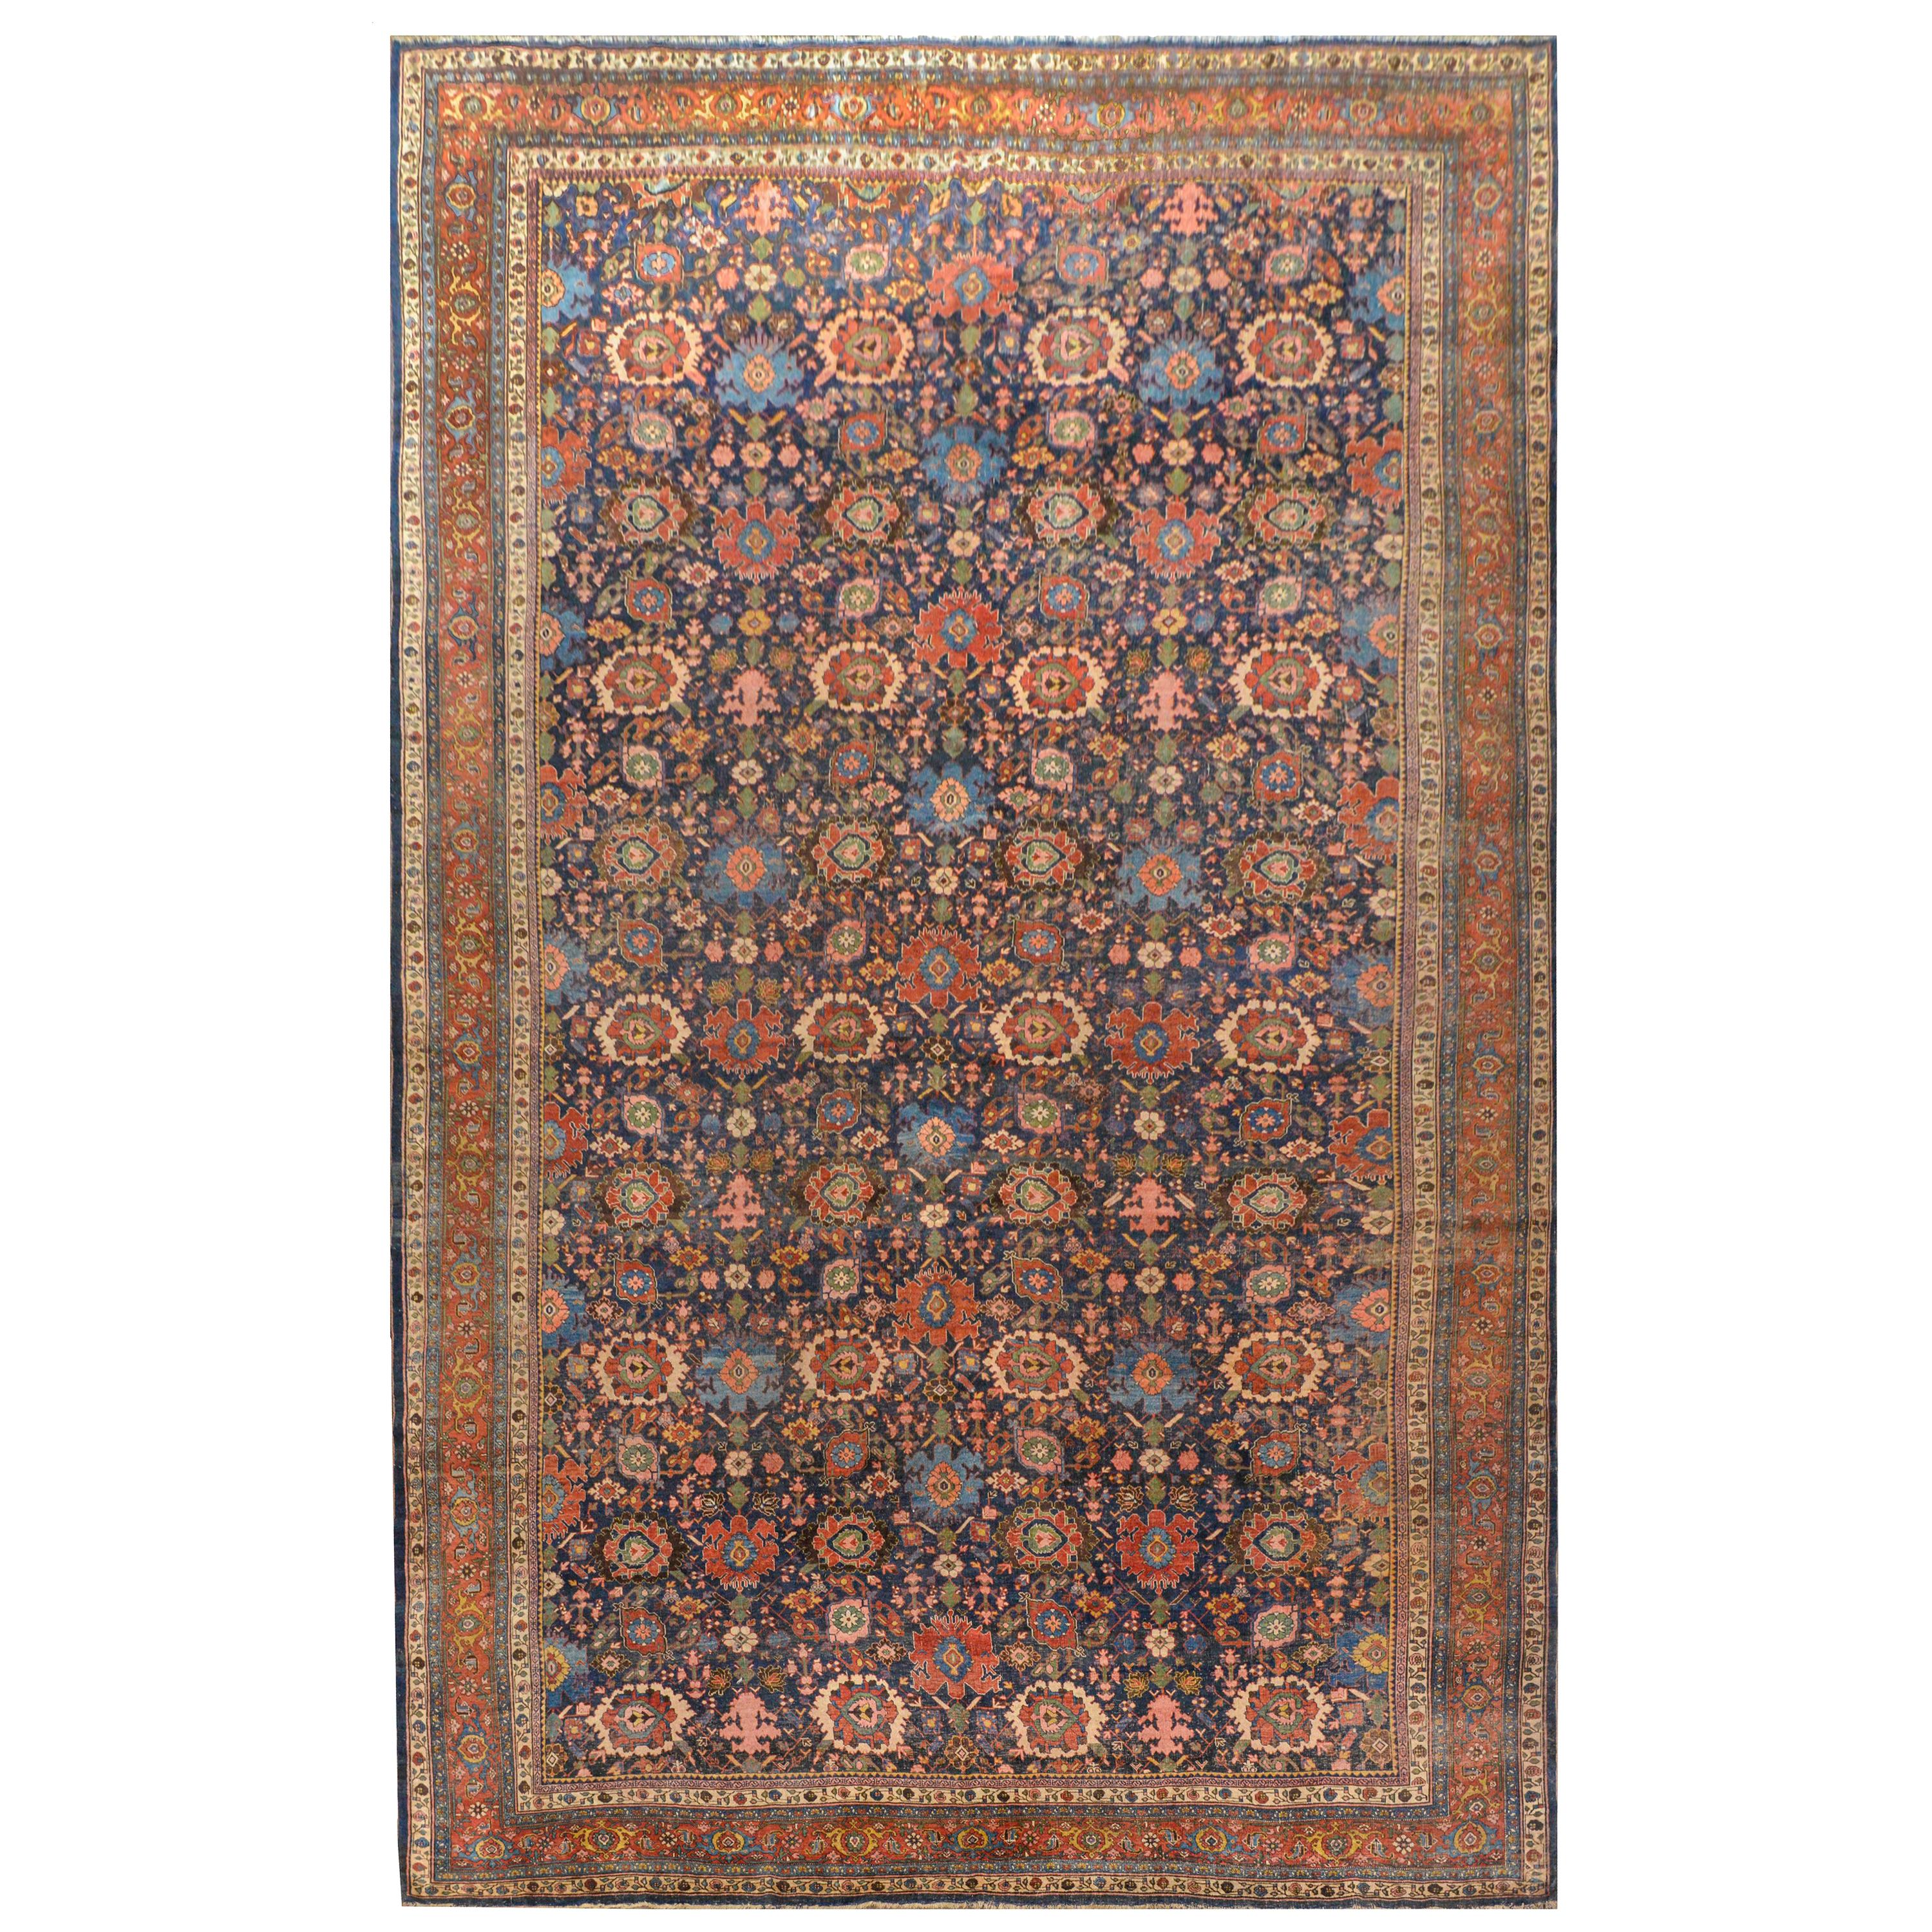 Incroyable tapis palatial Bidjar de la fin du 19e siècle en vente